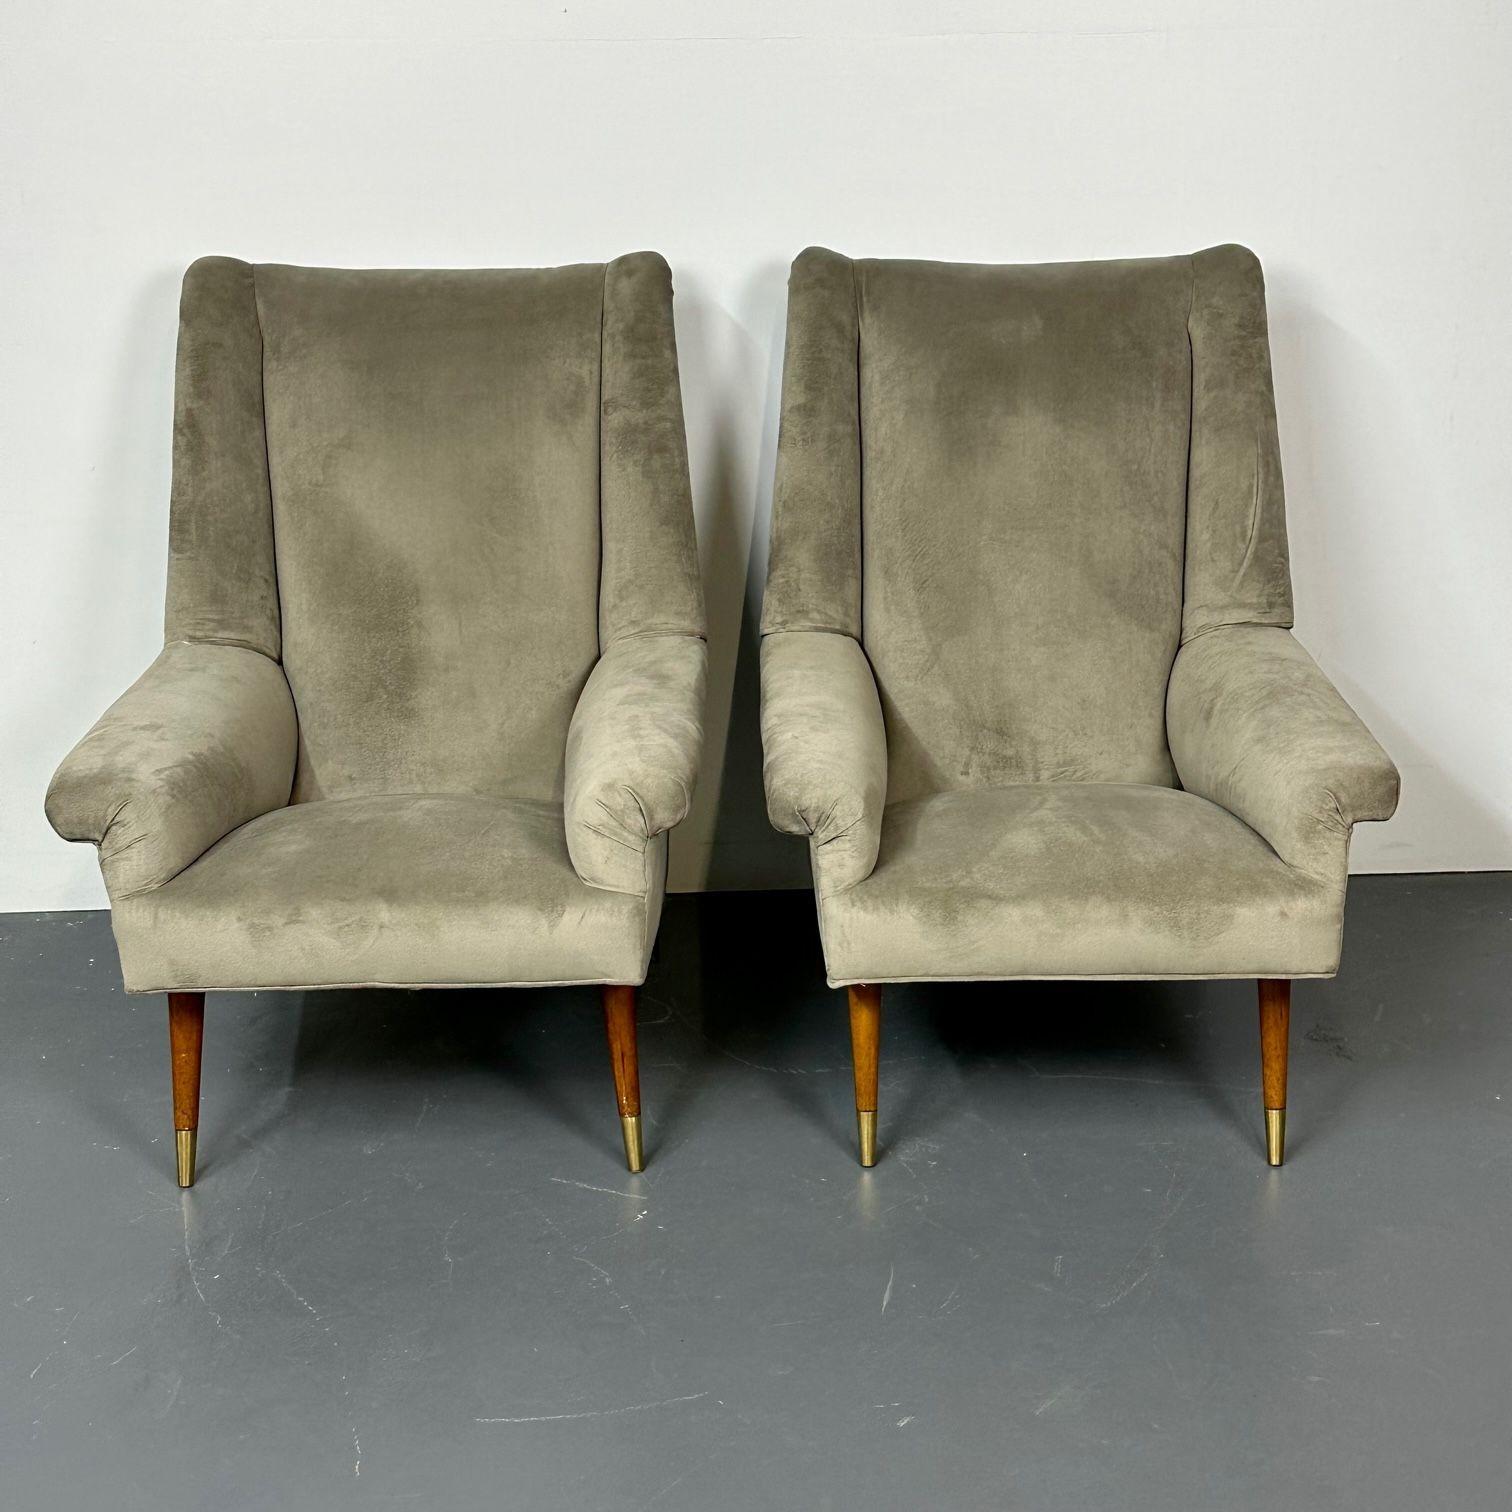 Italian Gio Ponti Style, Mid-Century Modern, Wingback Chairs, Grey Velvet, Wood, 1950s